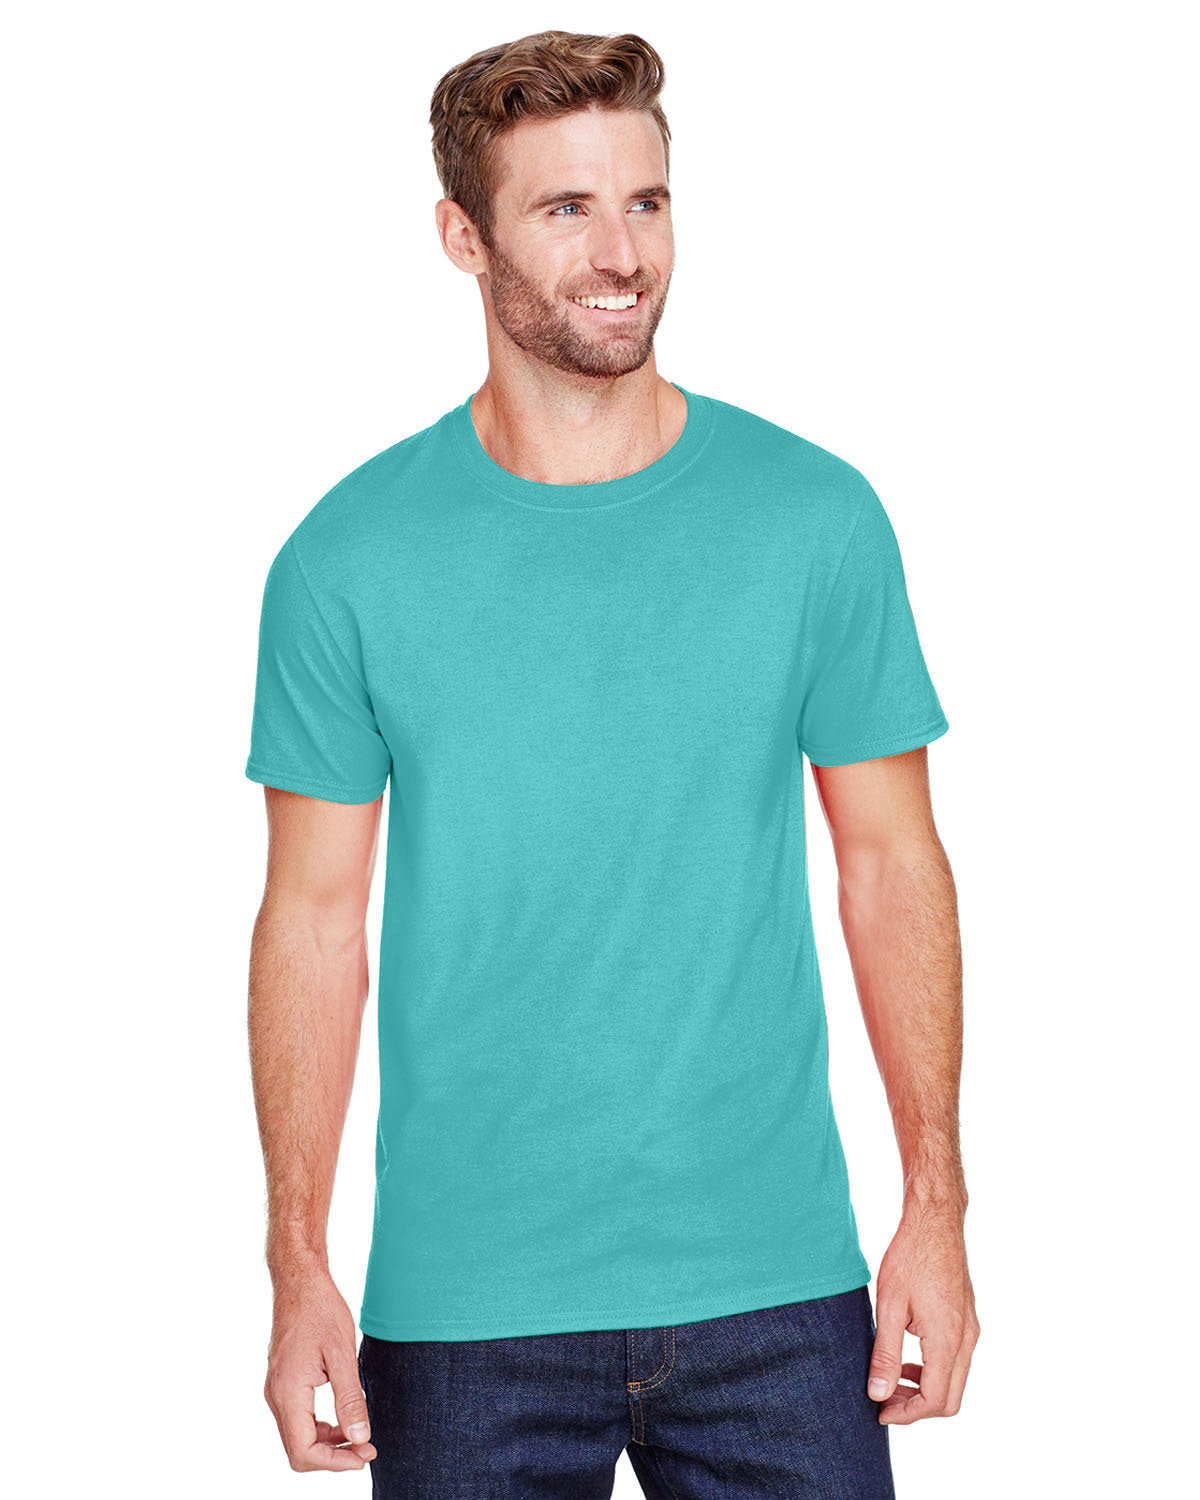 560MR-Jerzees-SCUBA BLUE-Jerzees-T-Shirts-1